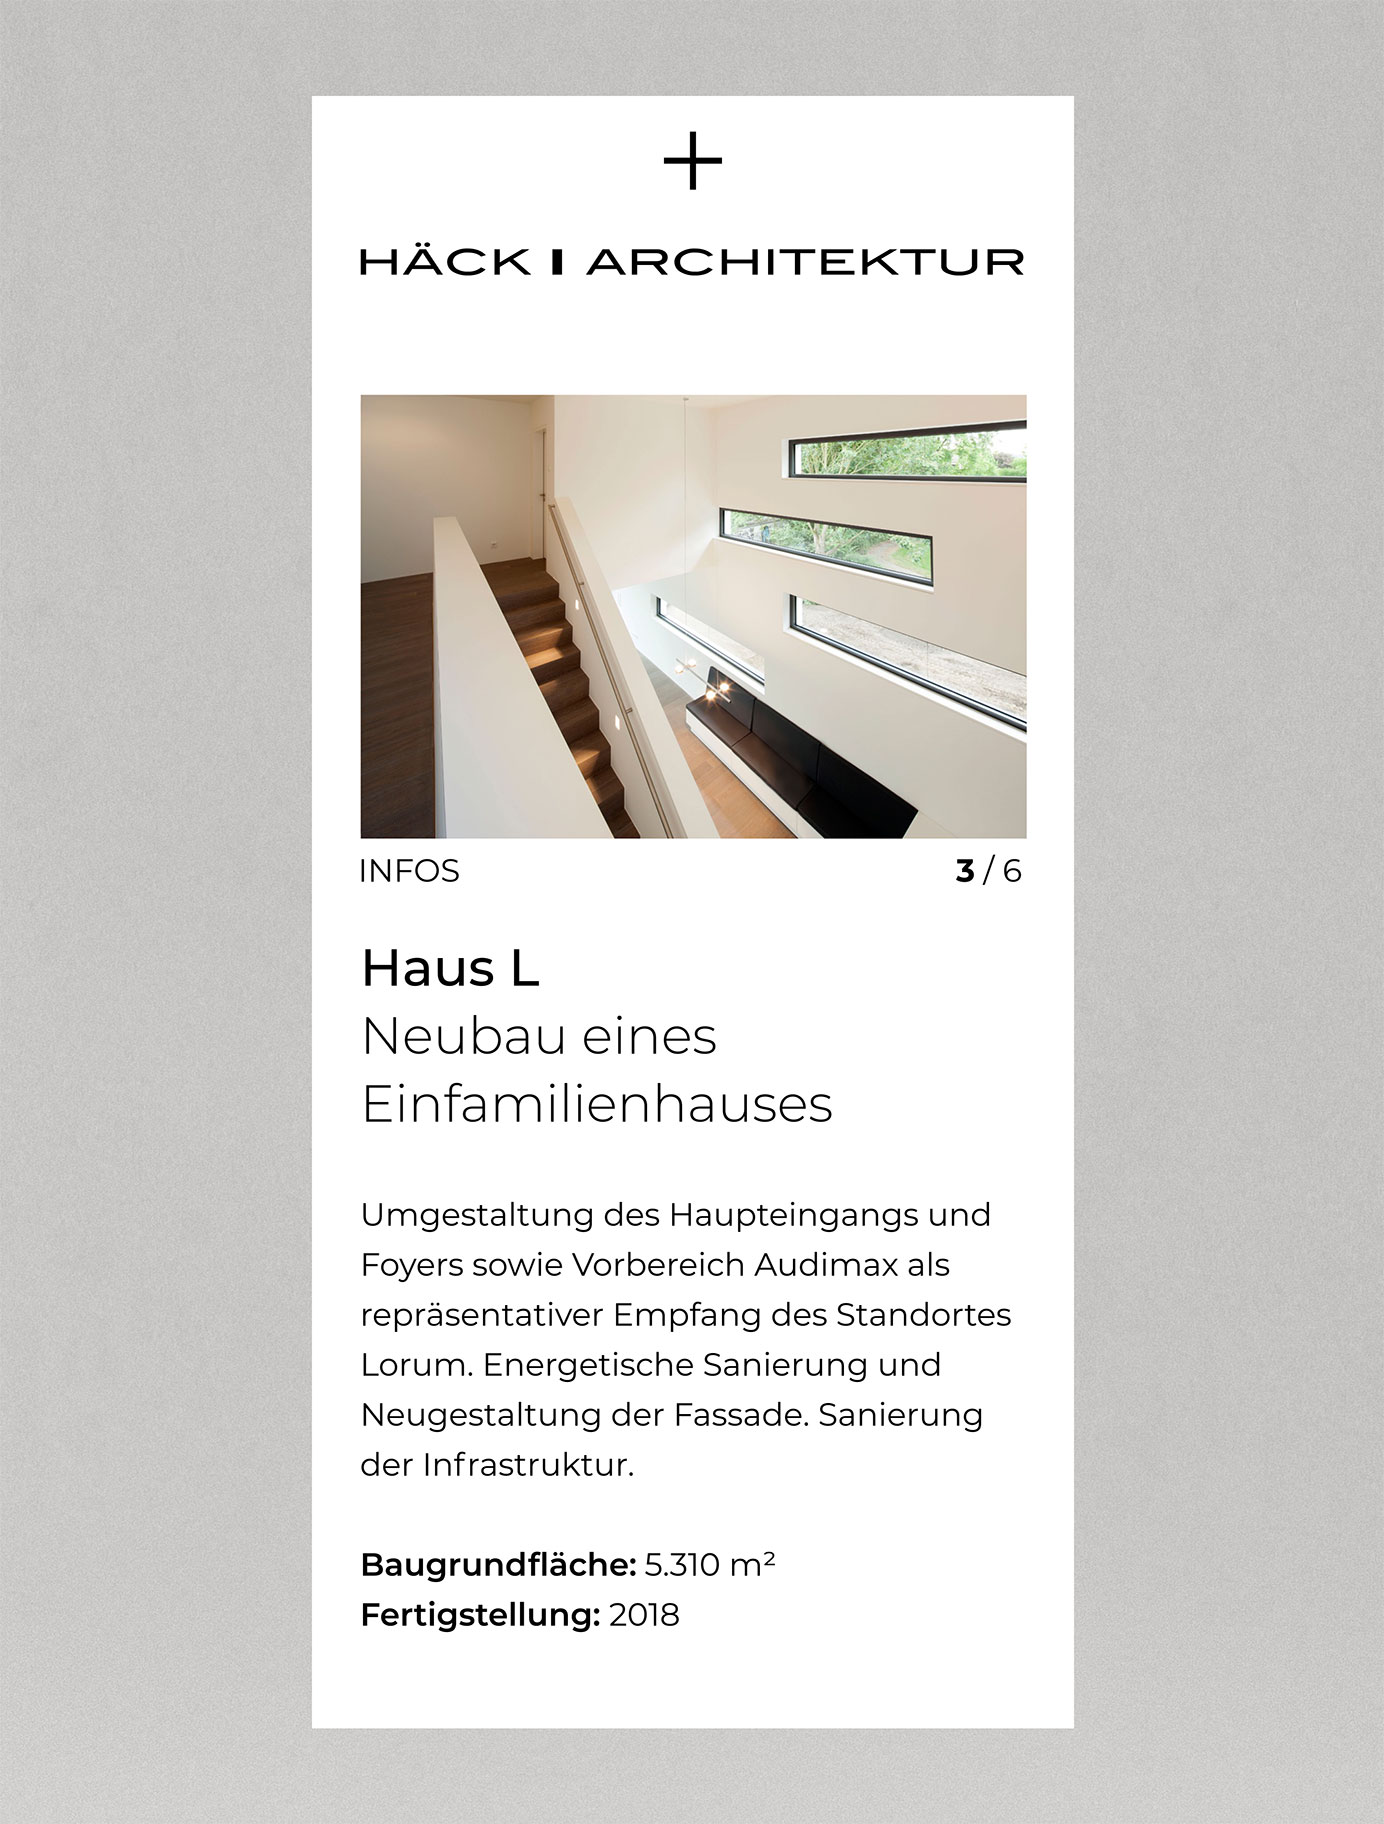 haeck-architektur-webdesign-mobil-amelie-jahn.jpg